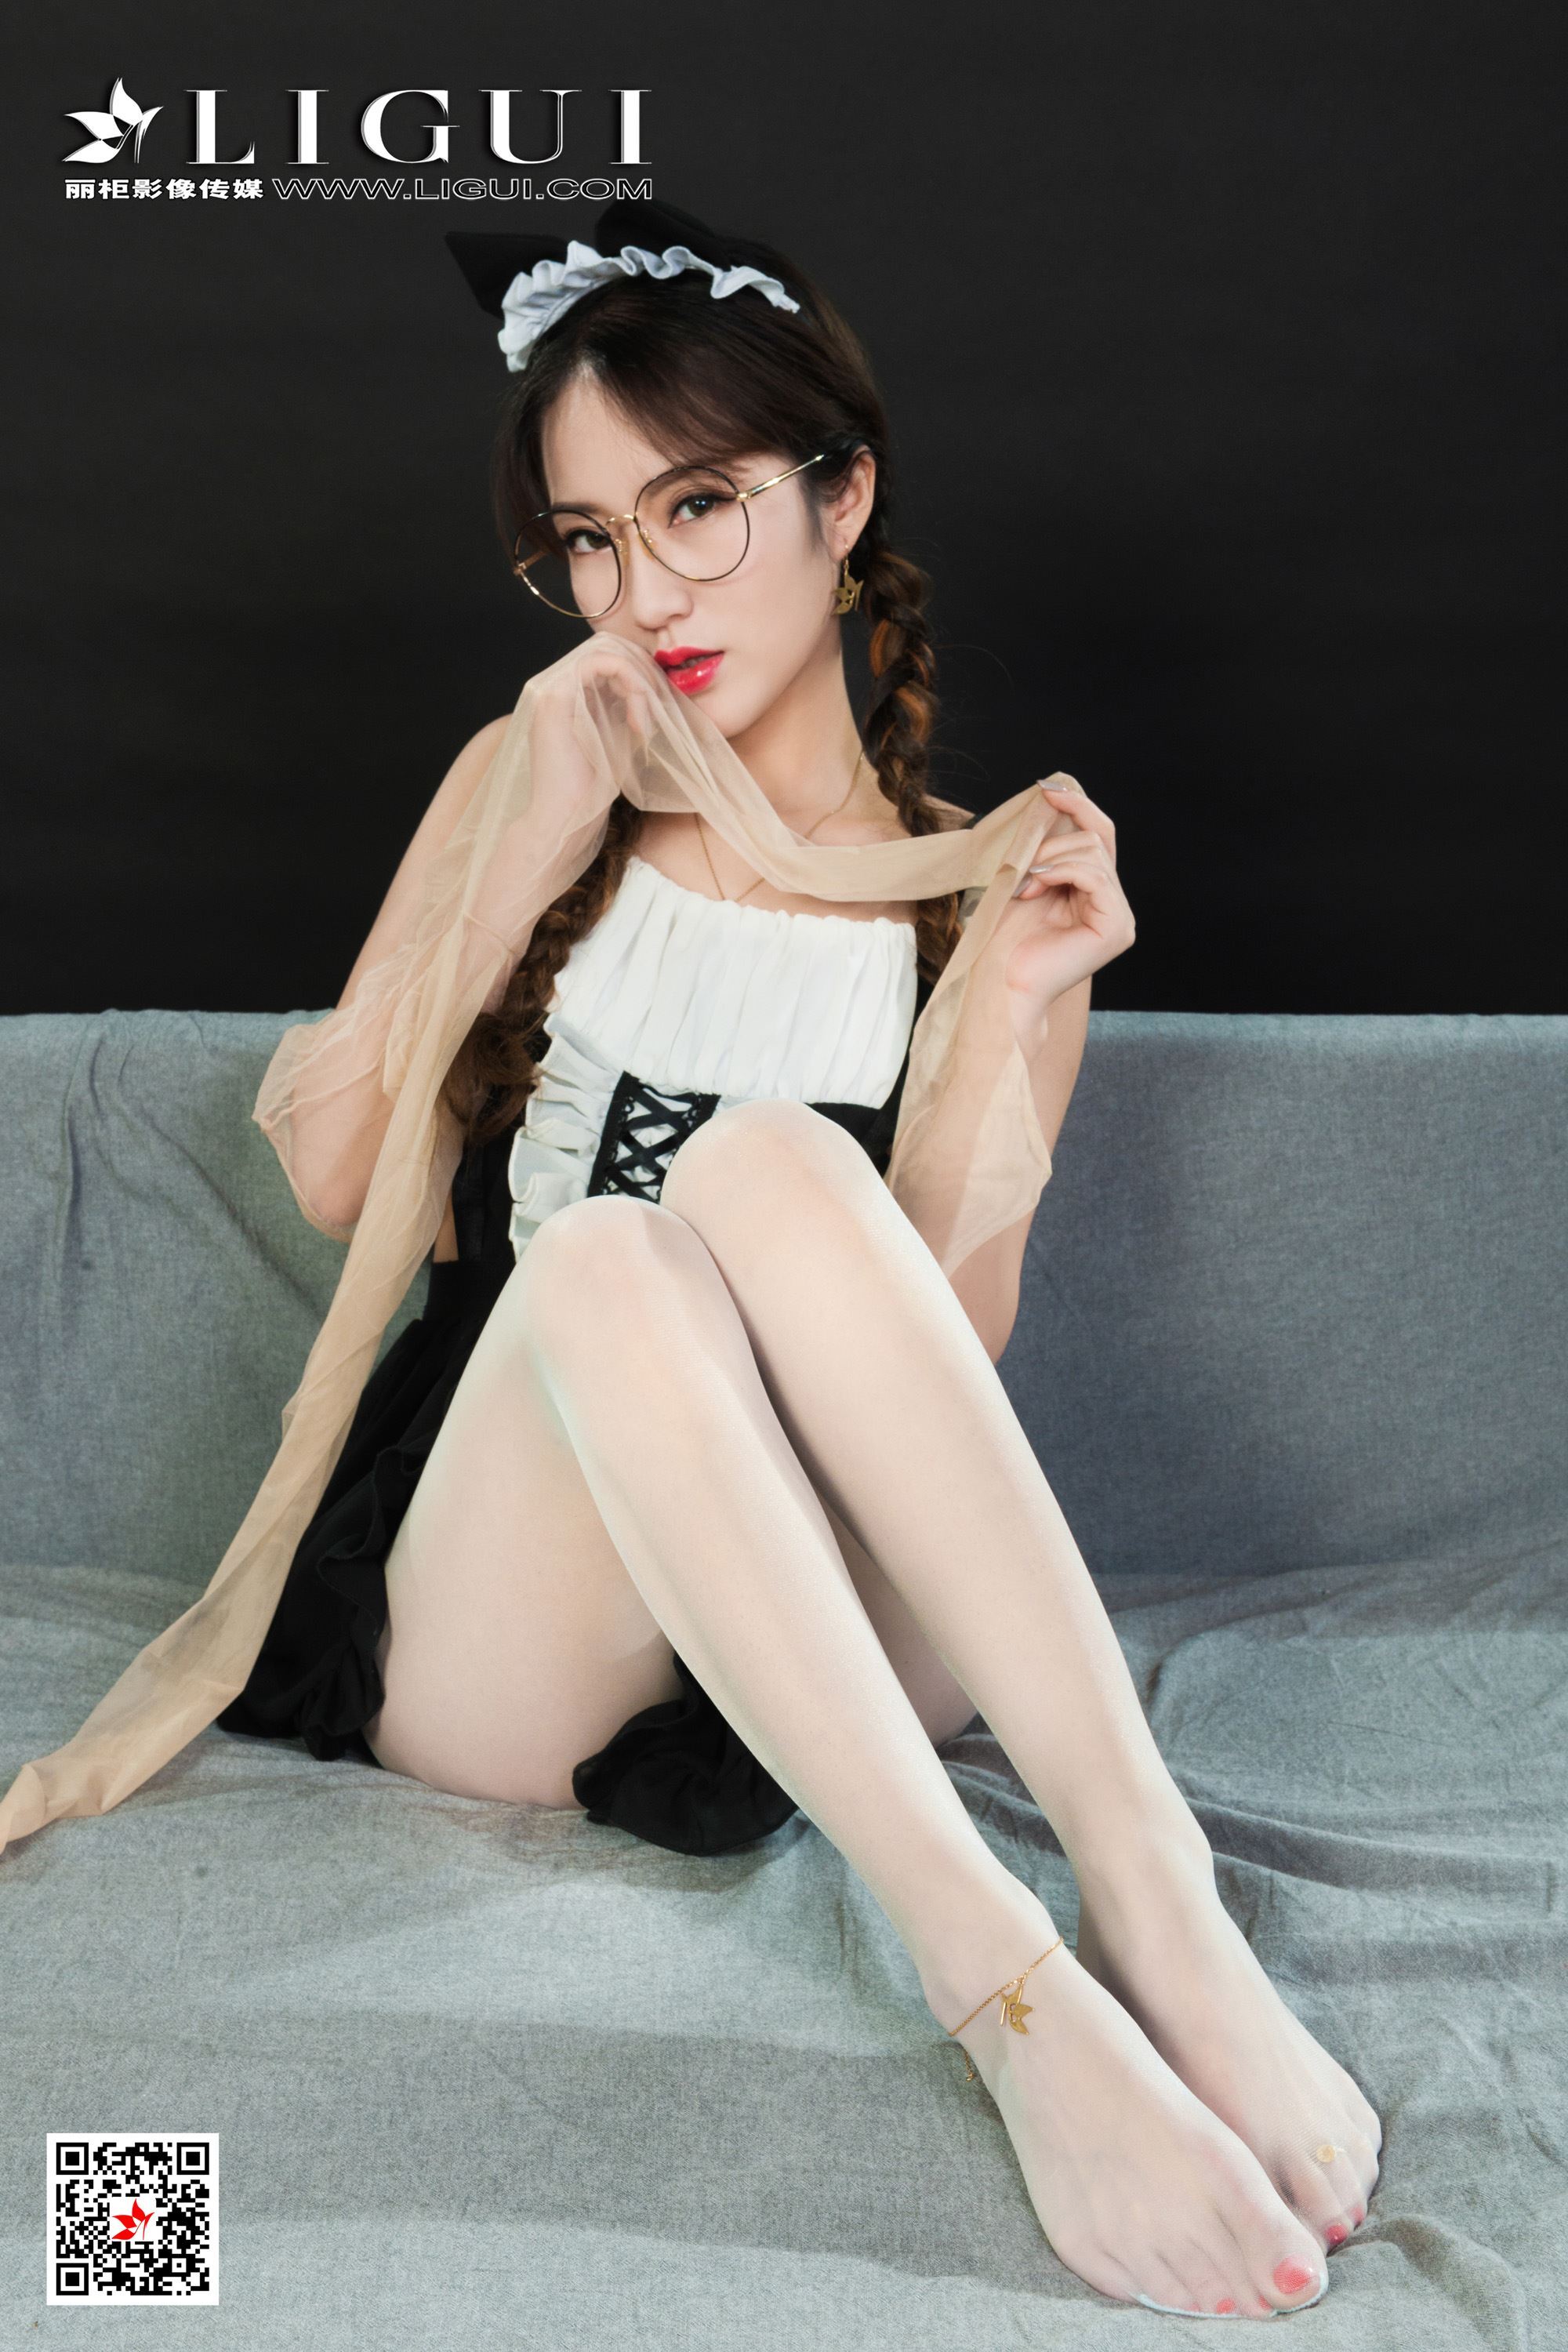 Ligui Beauty 2021.09.01 Network beauty Model Shixi